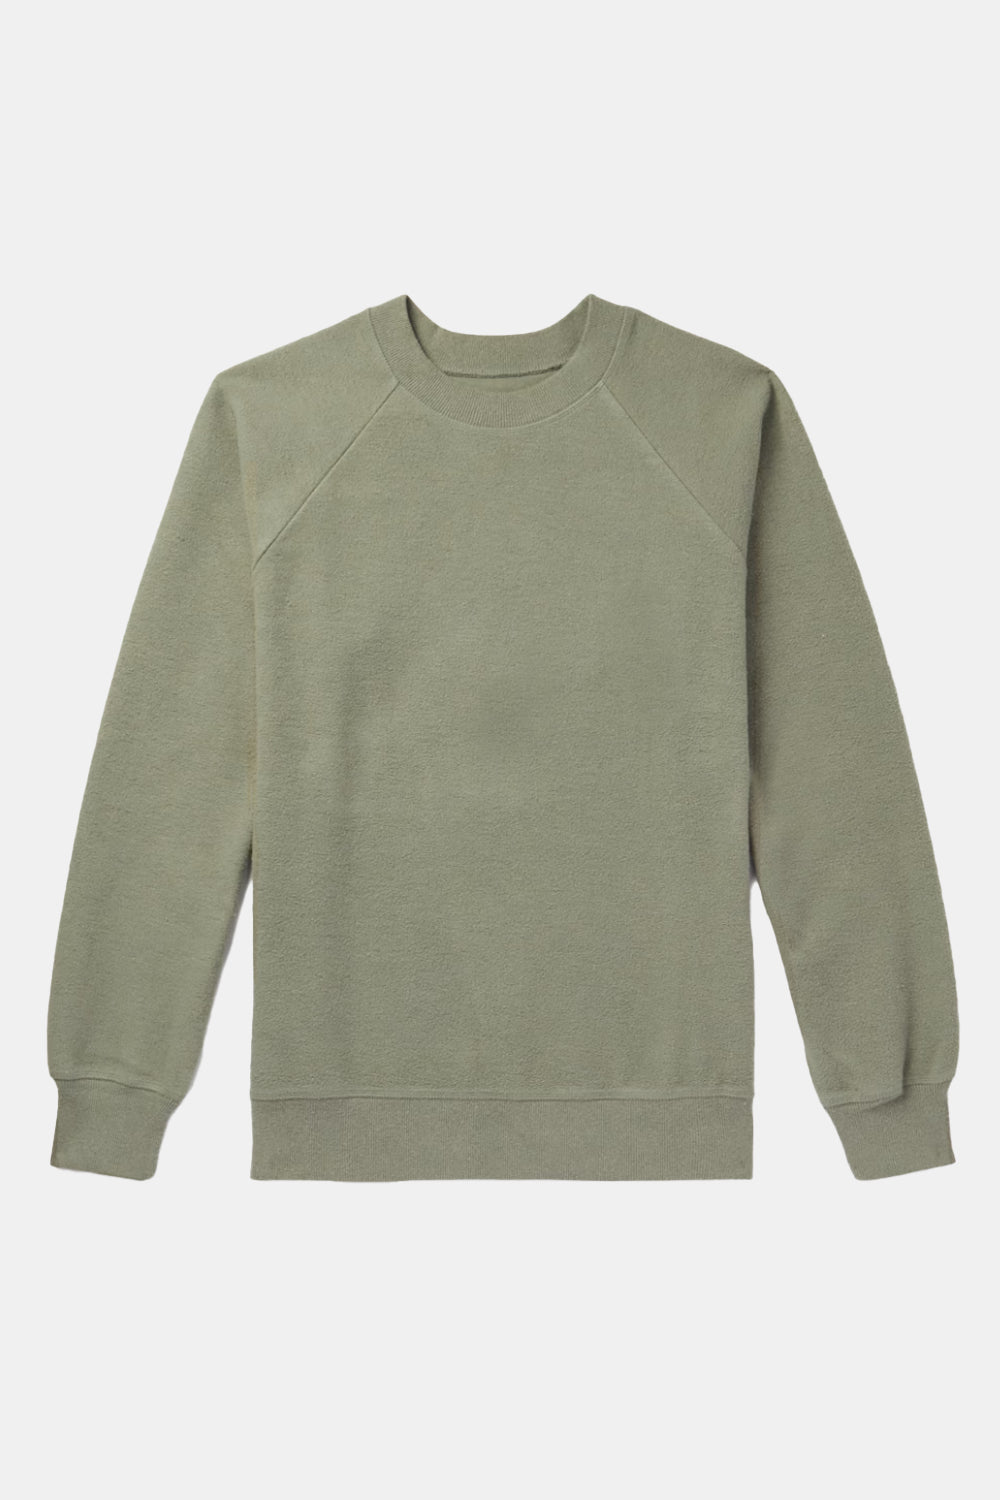 La Paz Cunha Sweatshirt (Military Green Fleece)